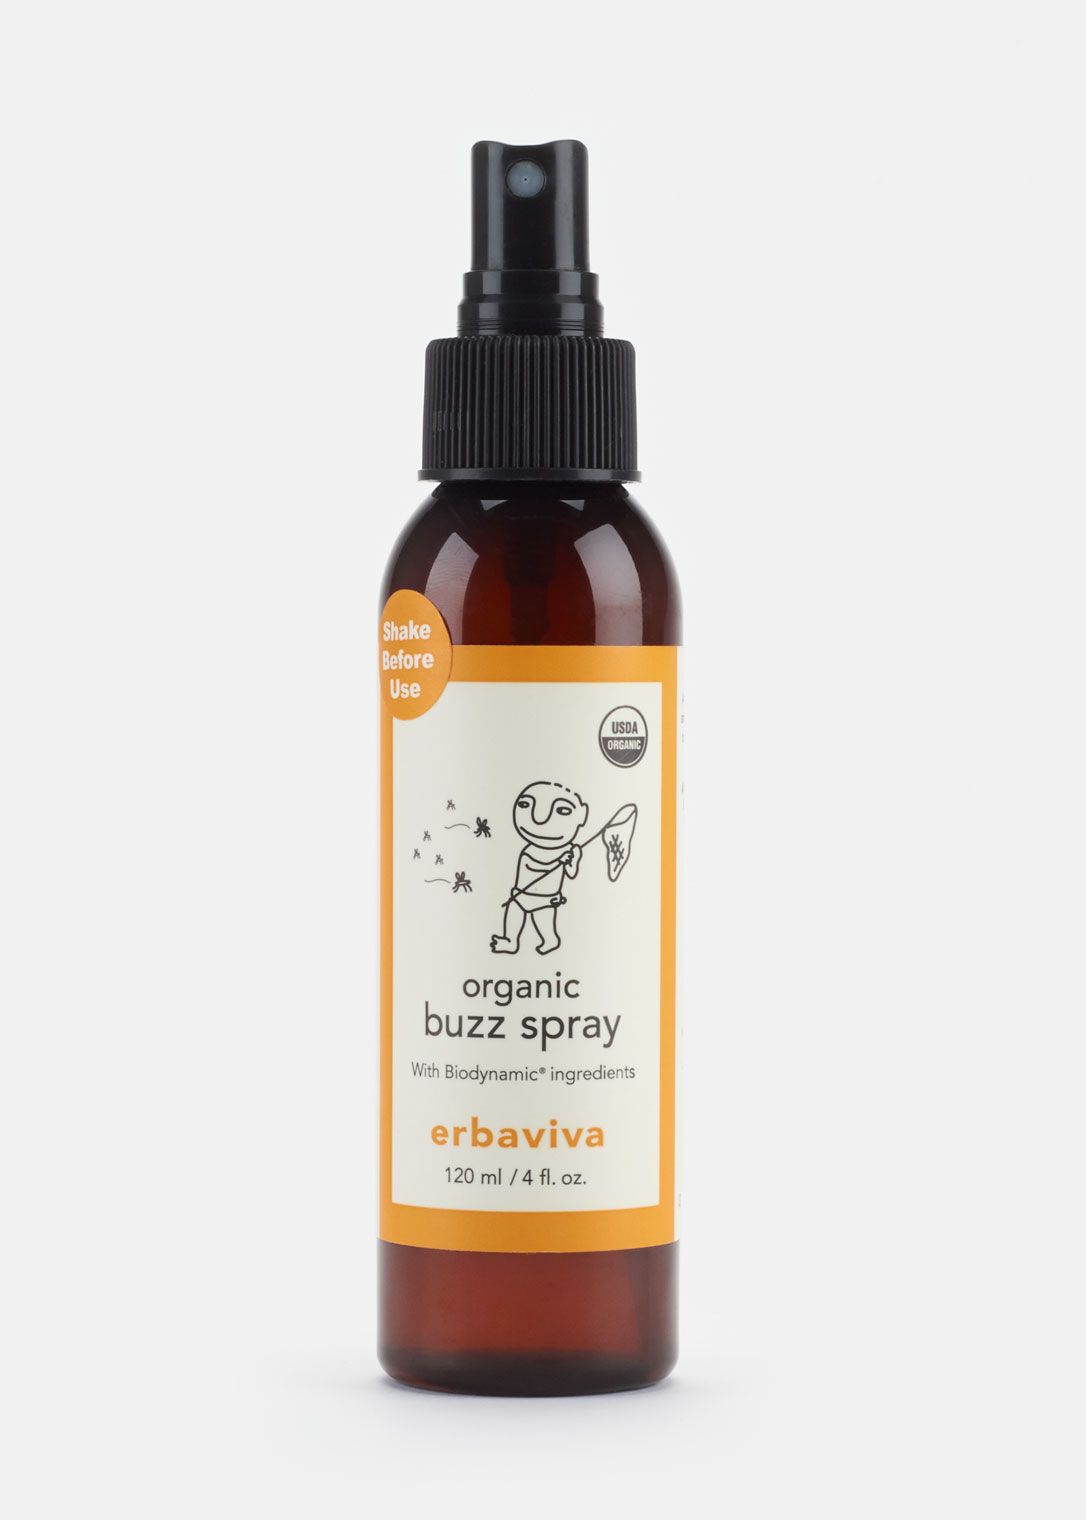 Organic Bug Repellent by Ebraviva $21